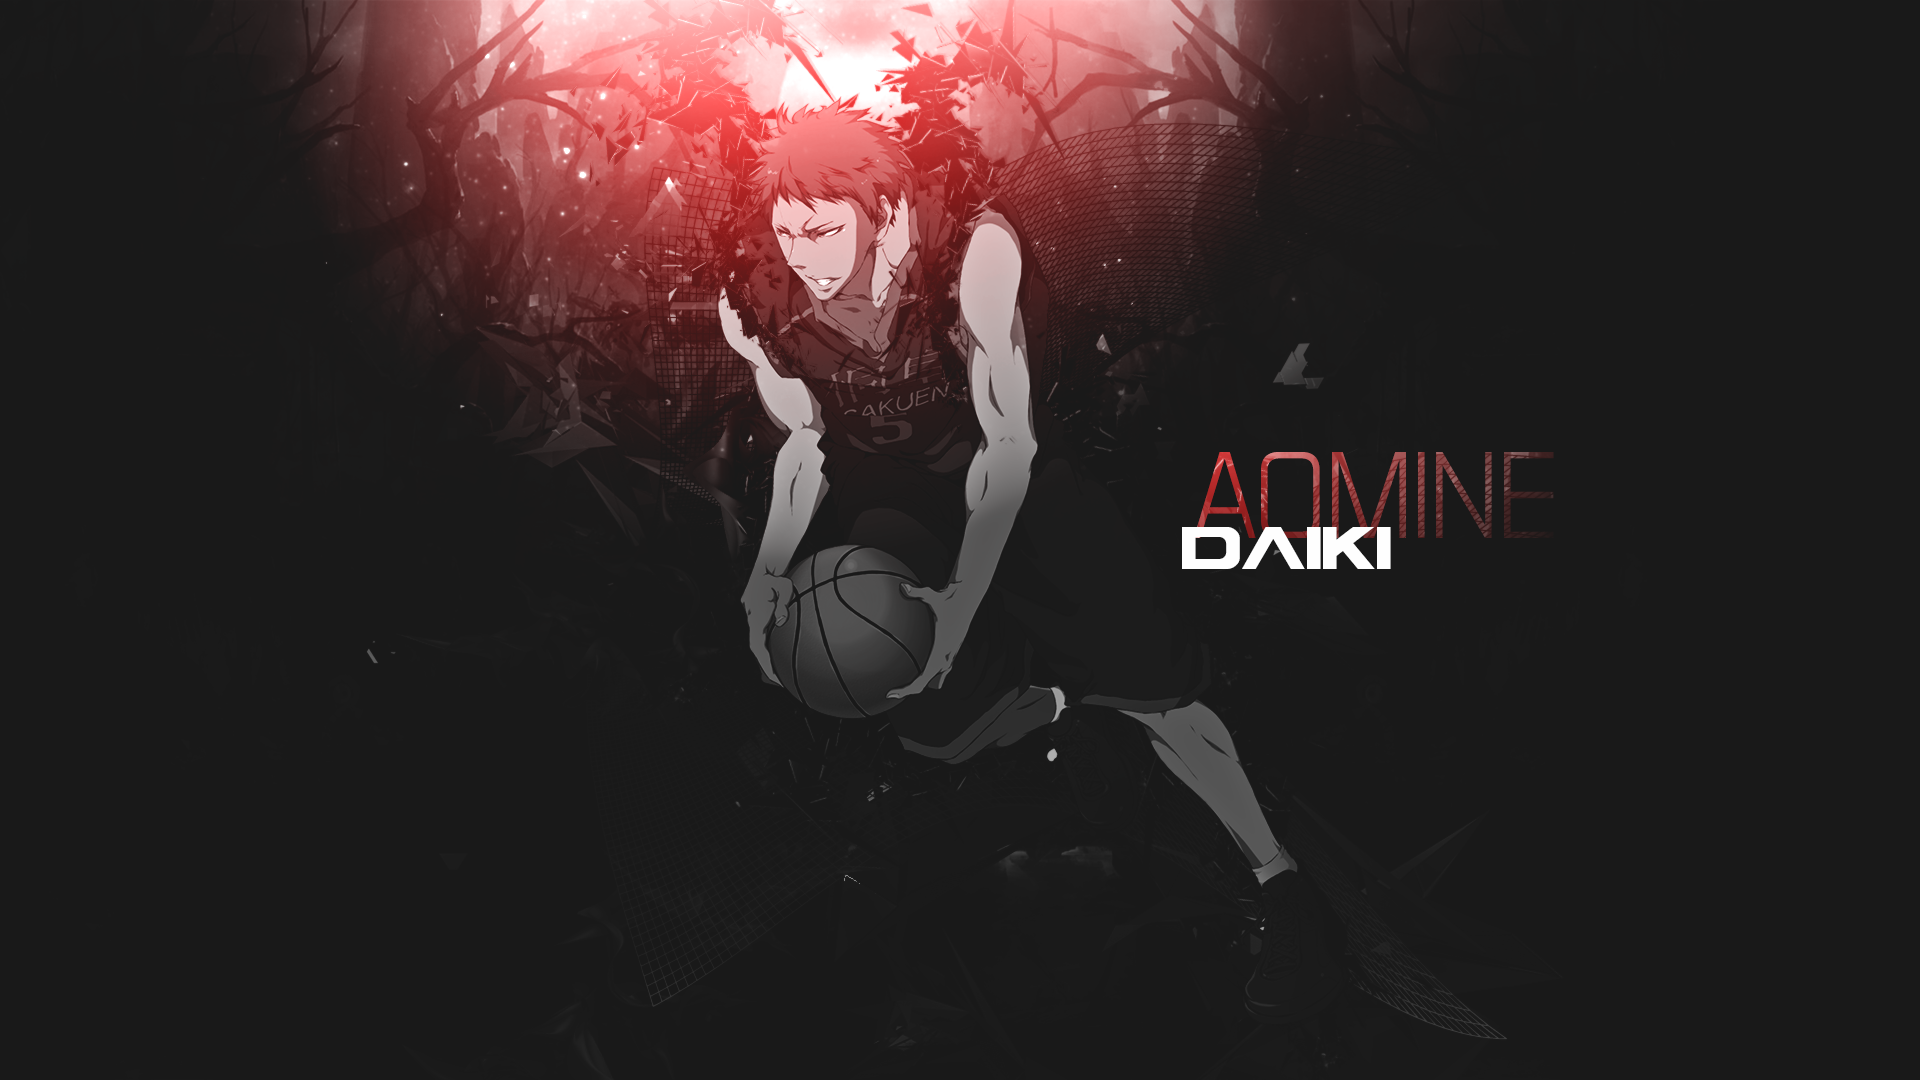 Daiki Aomine Wallpaper - Kuroko no basket by dani17k on DeviantArt